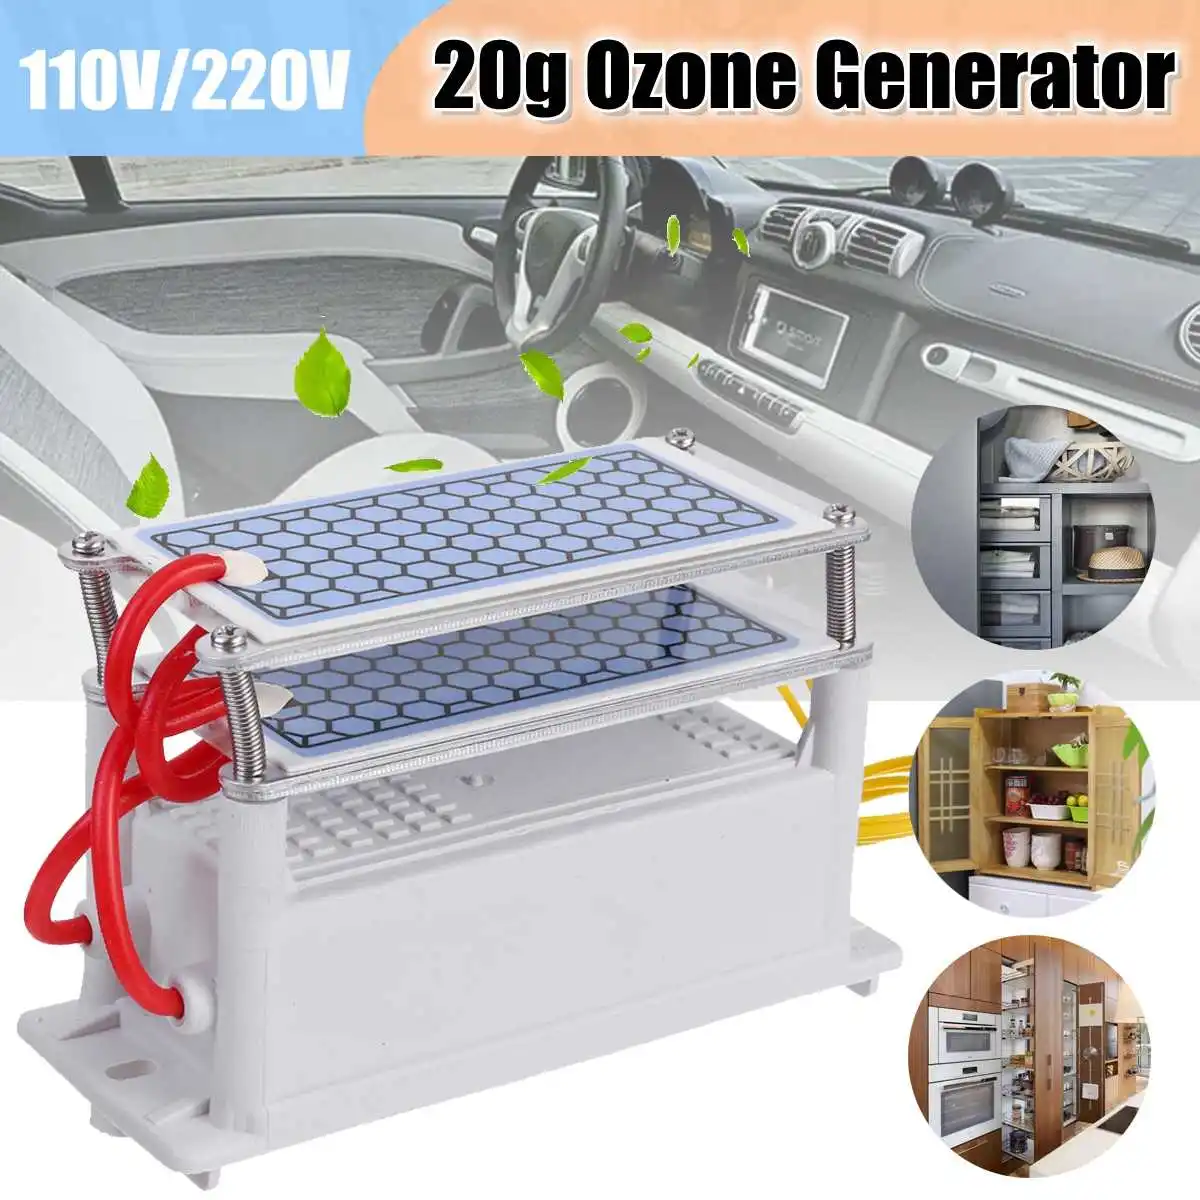 10g18g/20g 220V/110V Ozono GeneratorAir Valytuvas Ozonizador Ozonatorius Oro valymo Ozon Generatorius Ozonizer Sterilizacija Kvapas